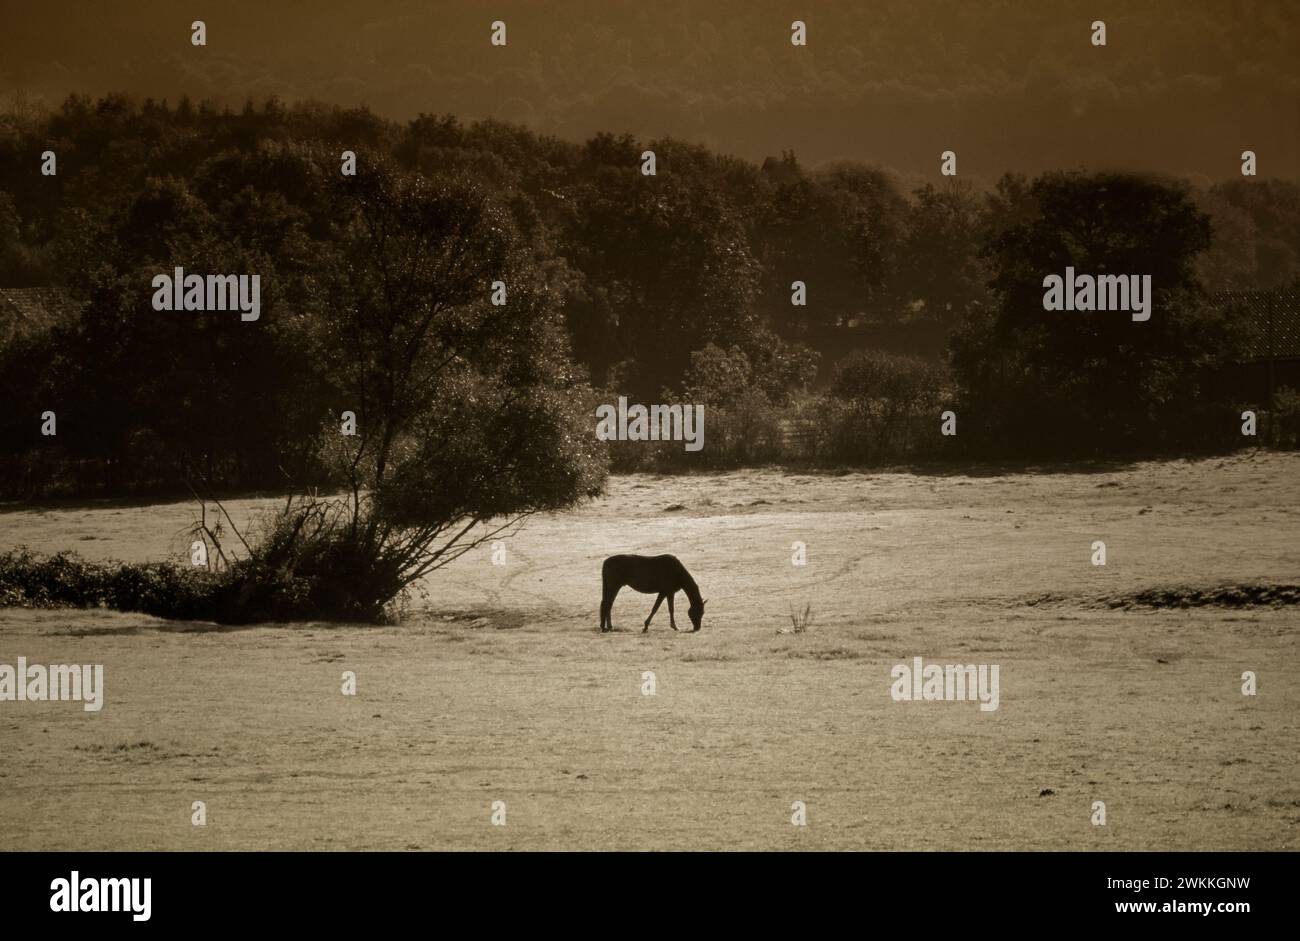 Cheval stationnant sur une prairie, Bourgogne, France, Europe Banque D'Images